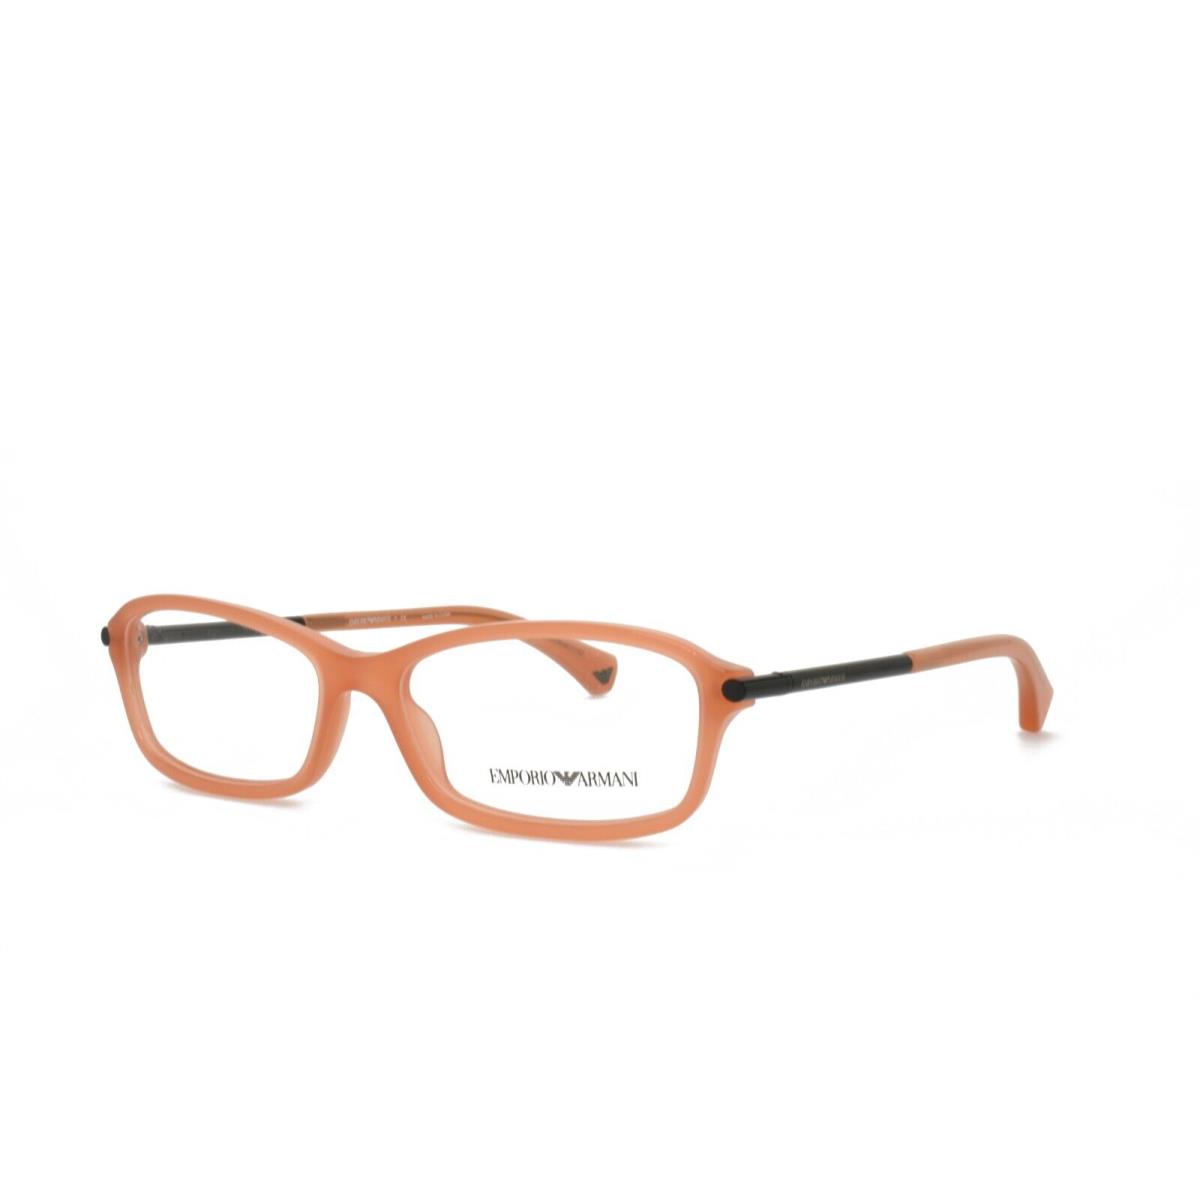 Emporio Armani 3006 5083 53-15-135 Apricot Eyeglasses Frames